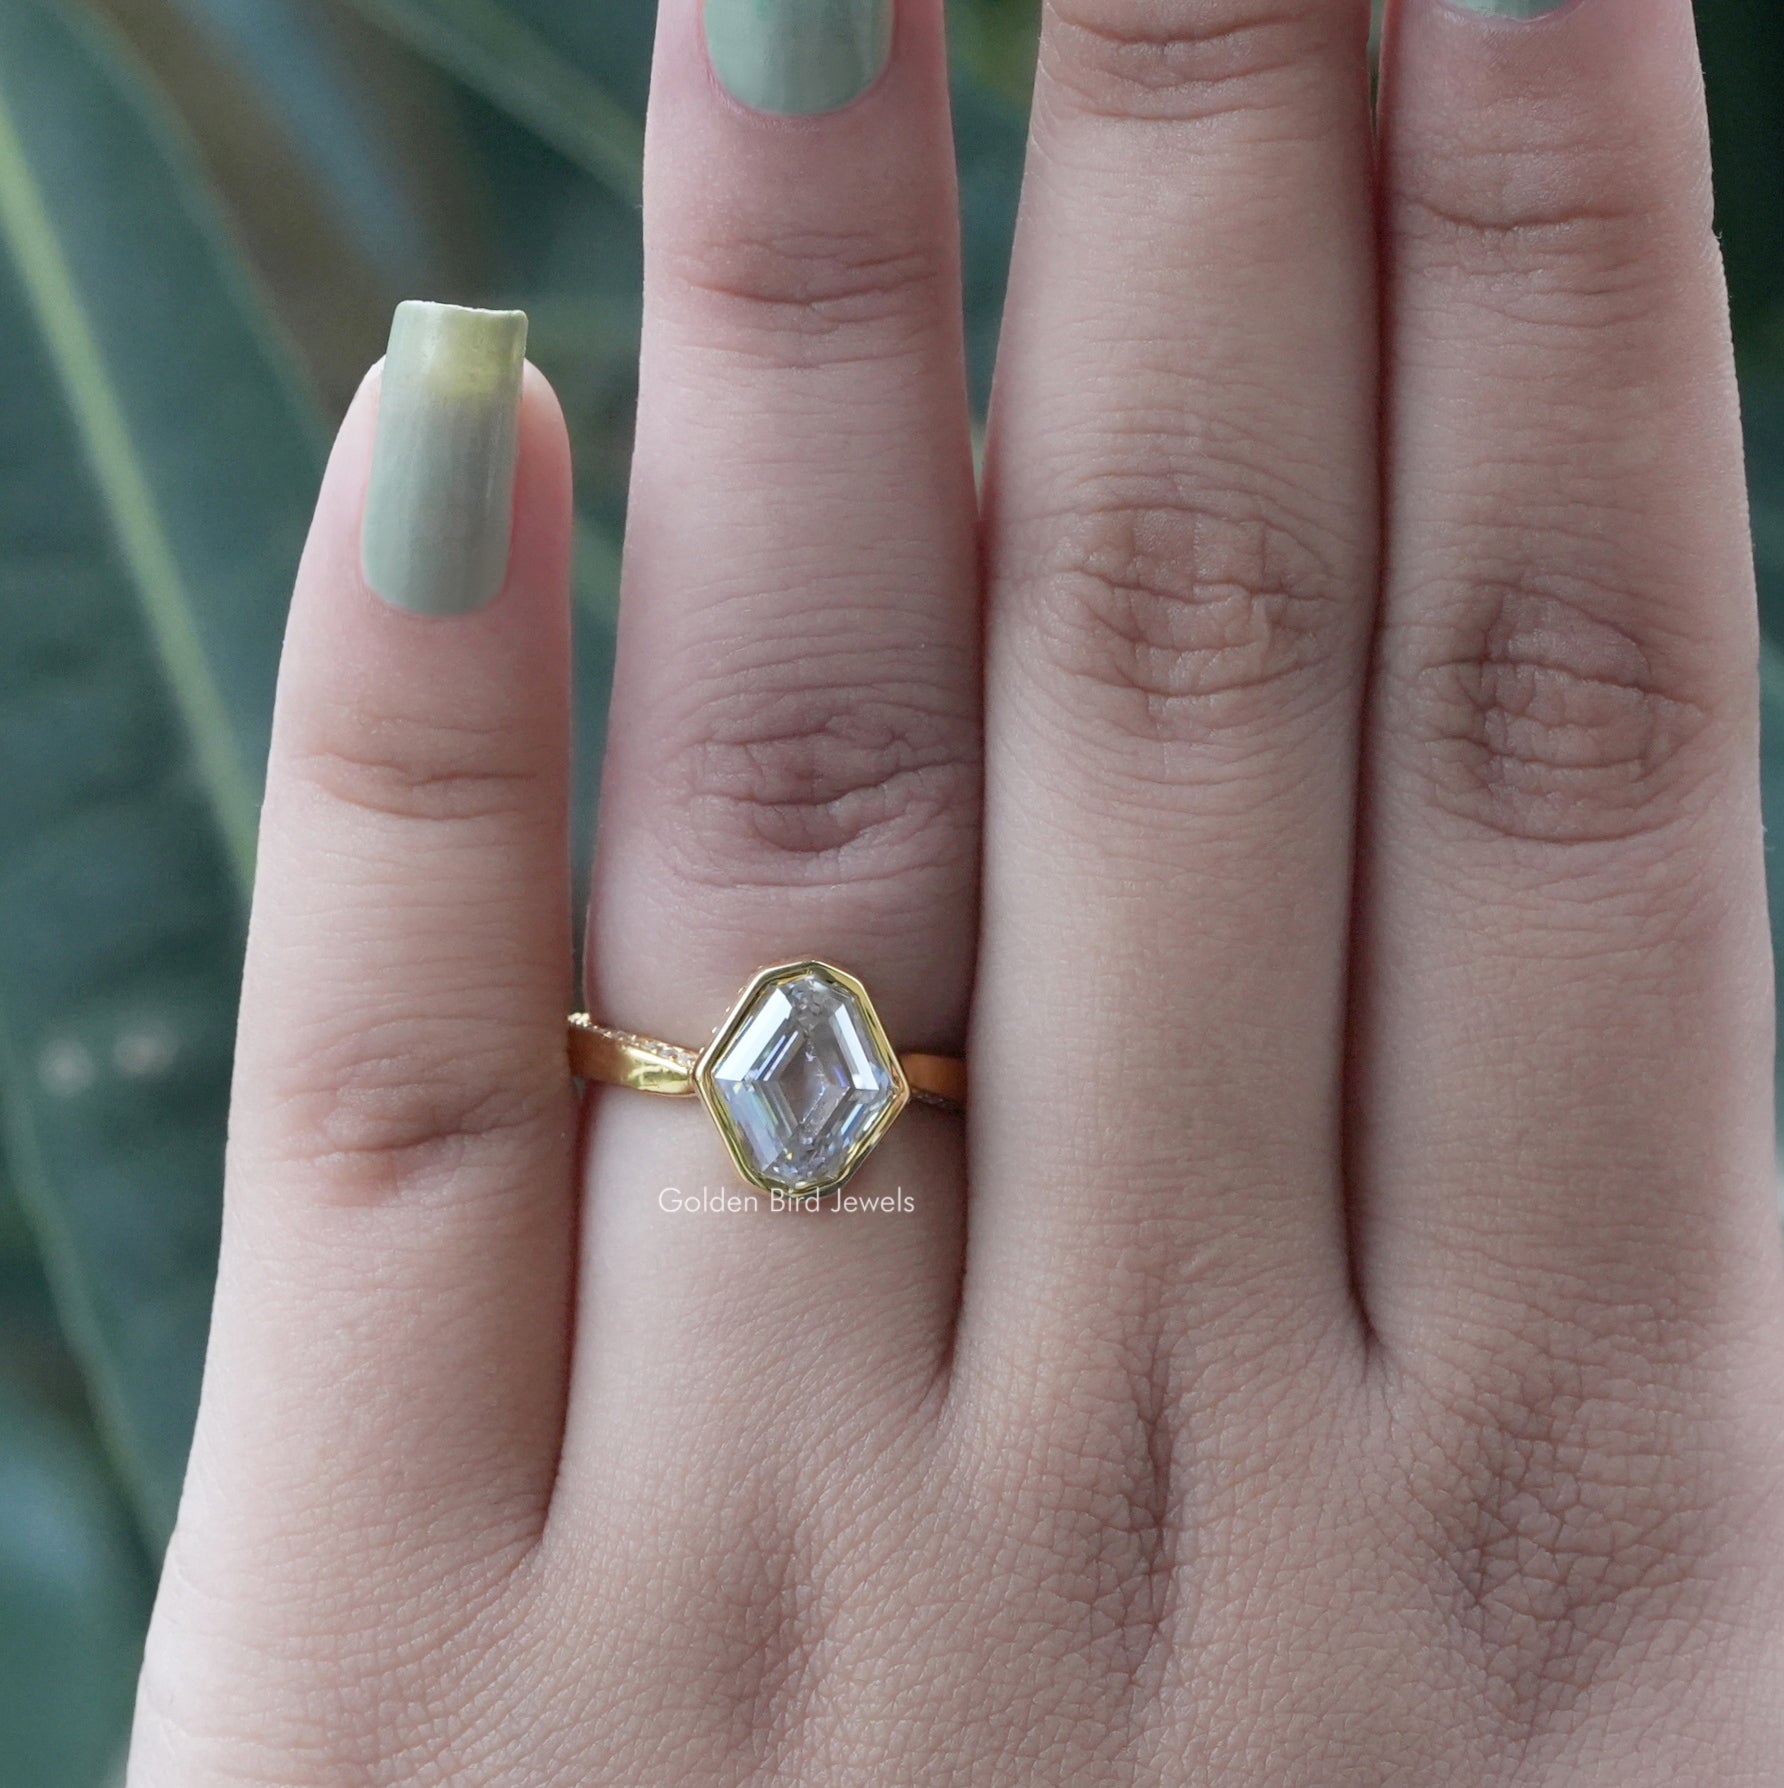 [Moval cut hidden halo engagement ring]-[Golden Bird Jewels]